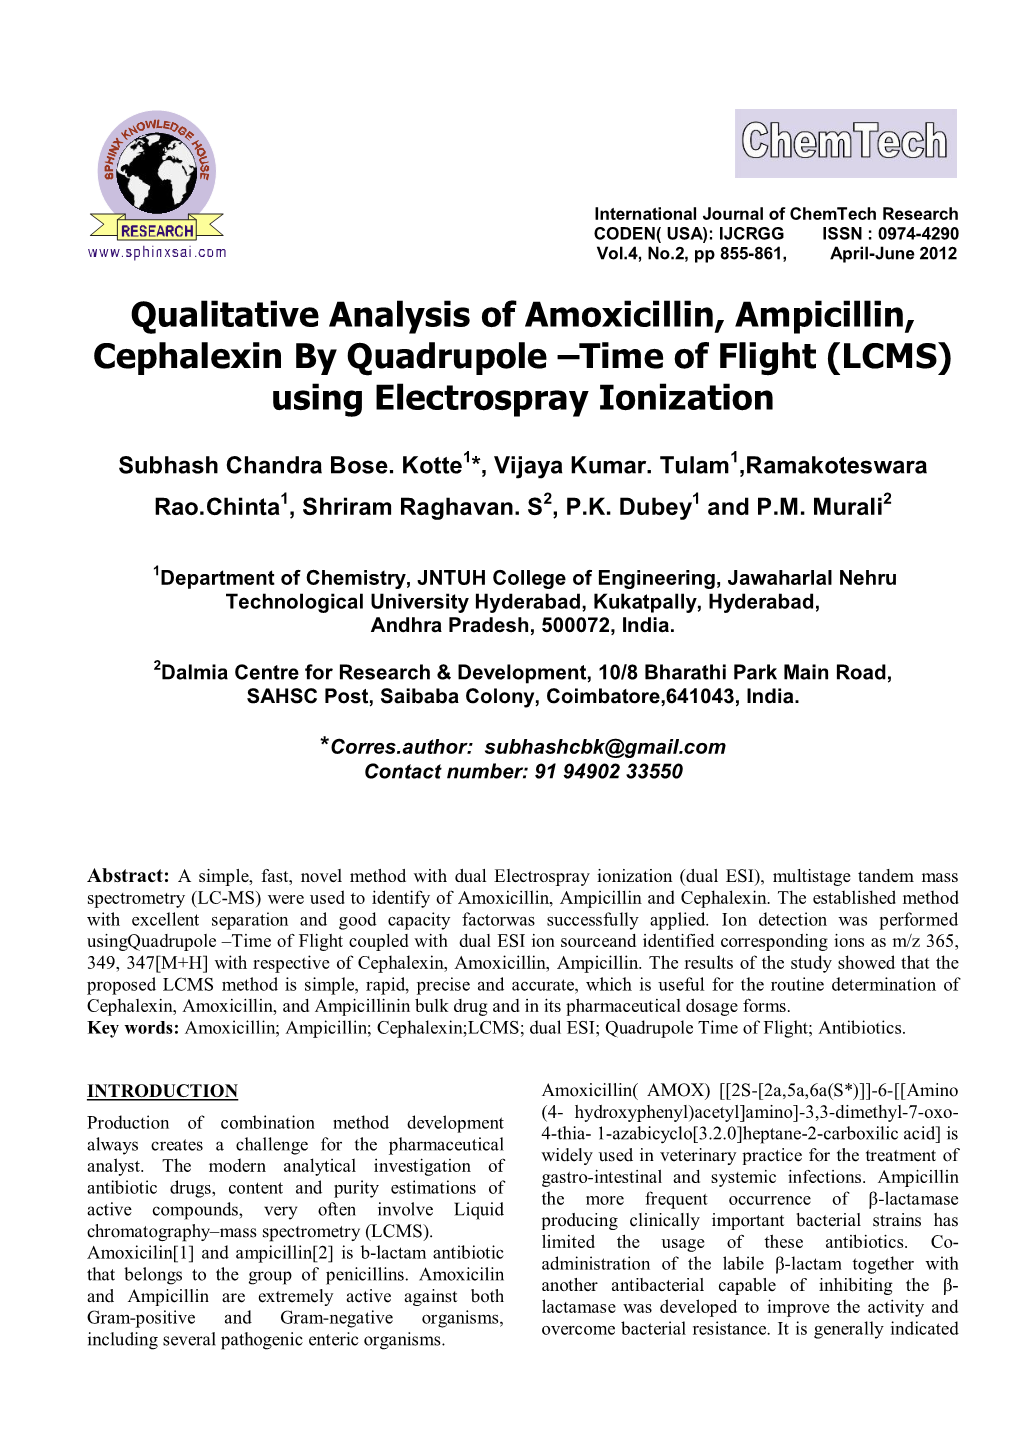 Qualitative Analysis of Amoxicillin, Ampicillin, Cephalexin by Quadrupole –Time of Flight (LCMS) Using Electrospray Ionization